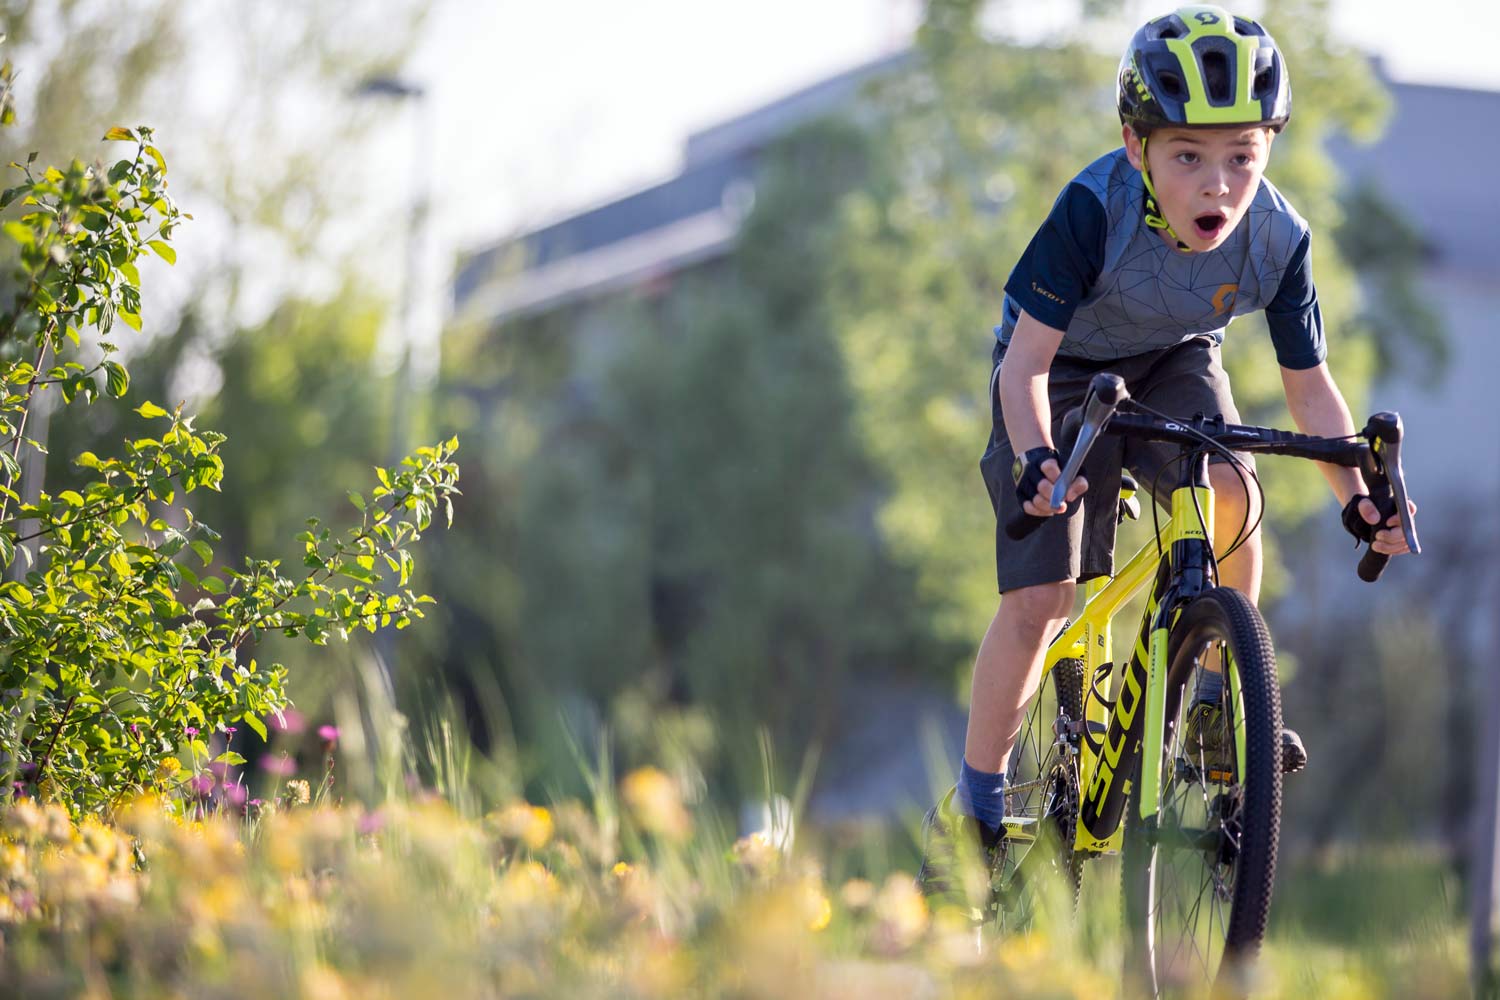 Scott Heroes Inspire Heroes, motivating kids on bikes